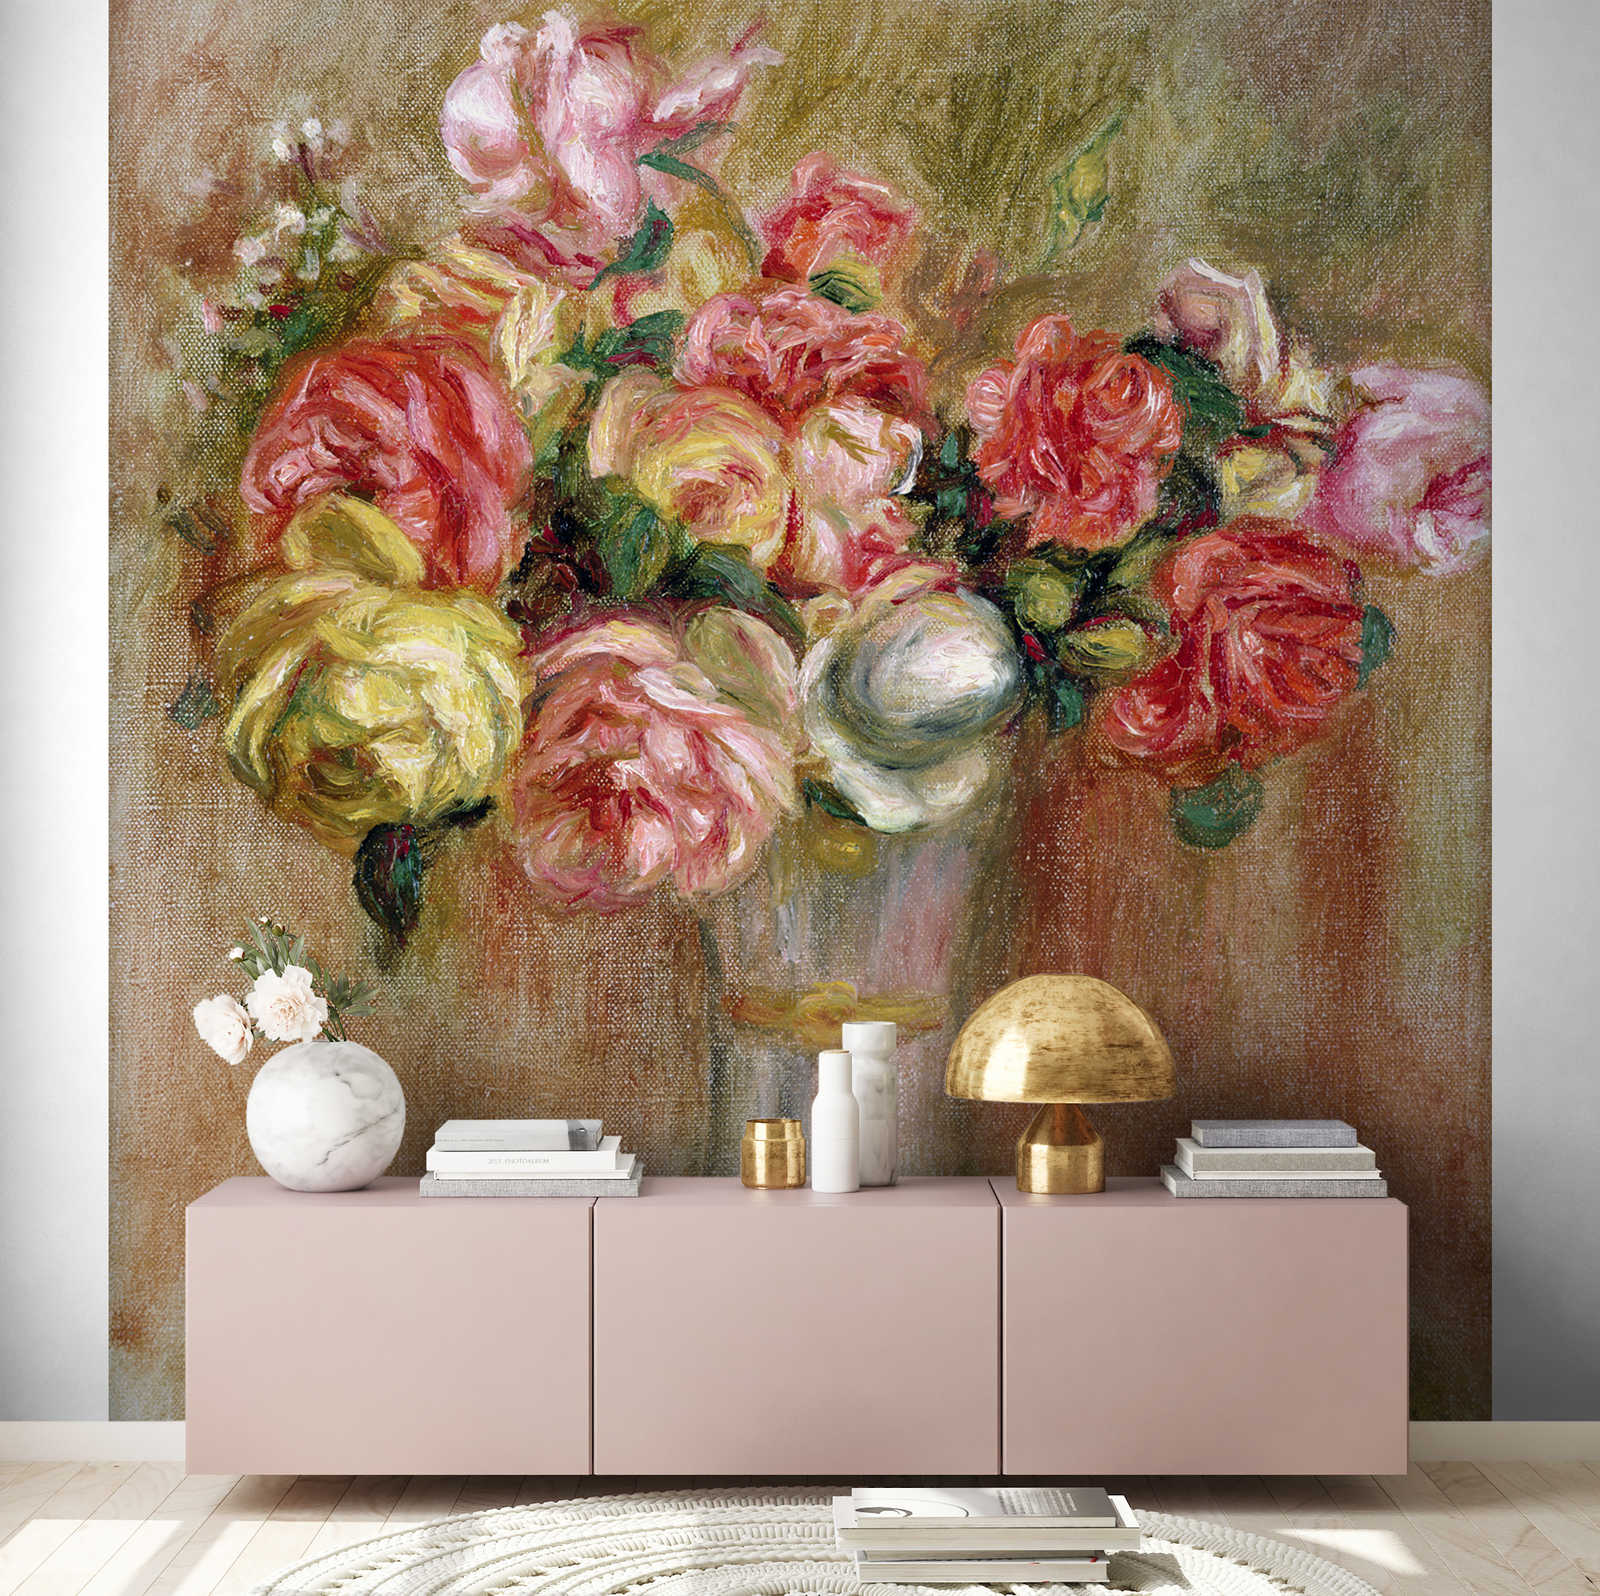             Rose in un vaso di Sevres" murale di Pierre Auguste Renoir
        